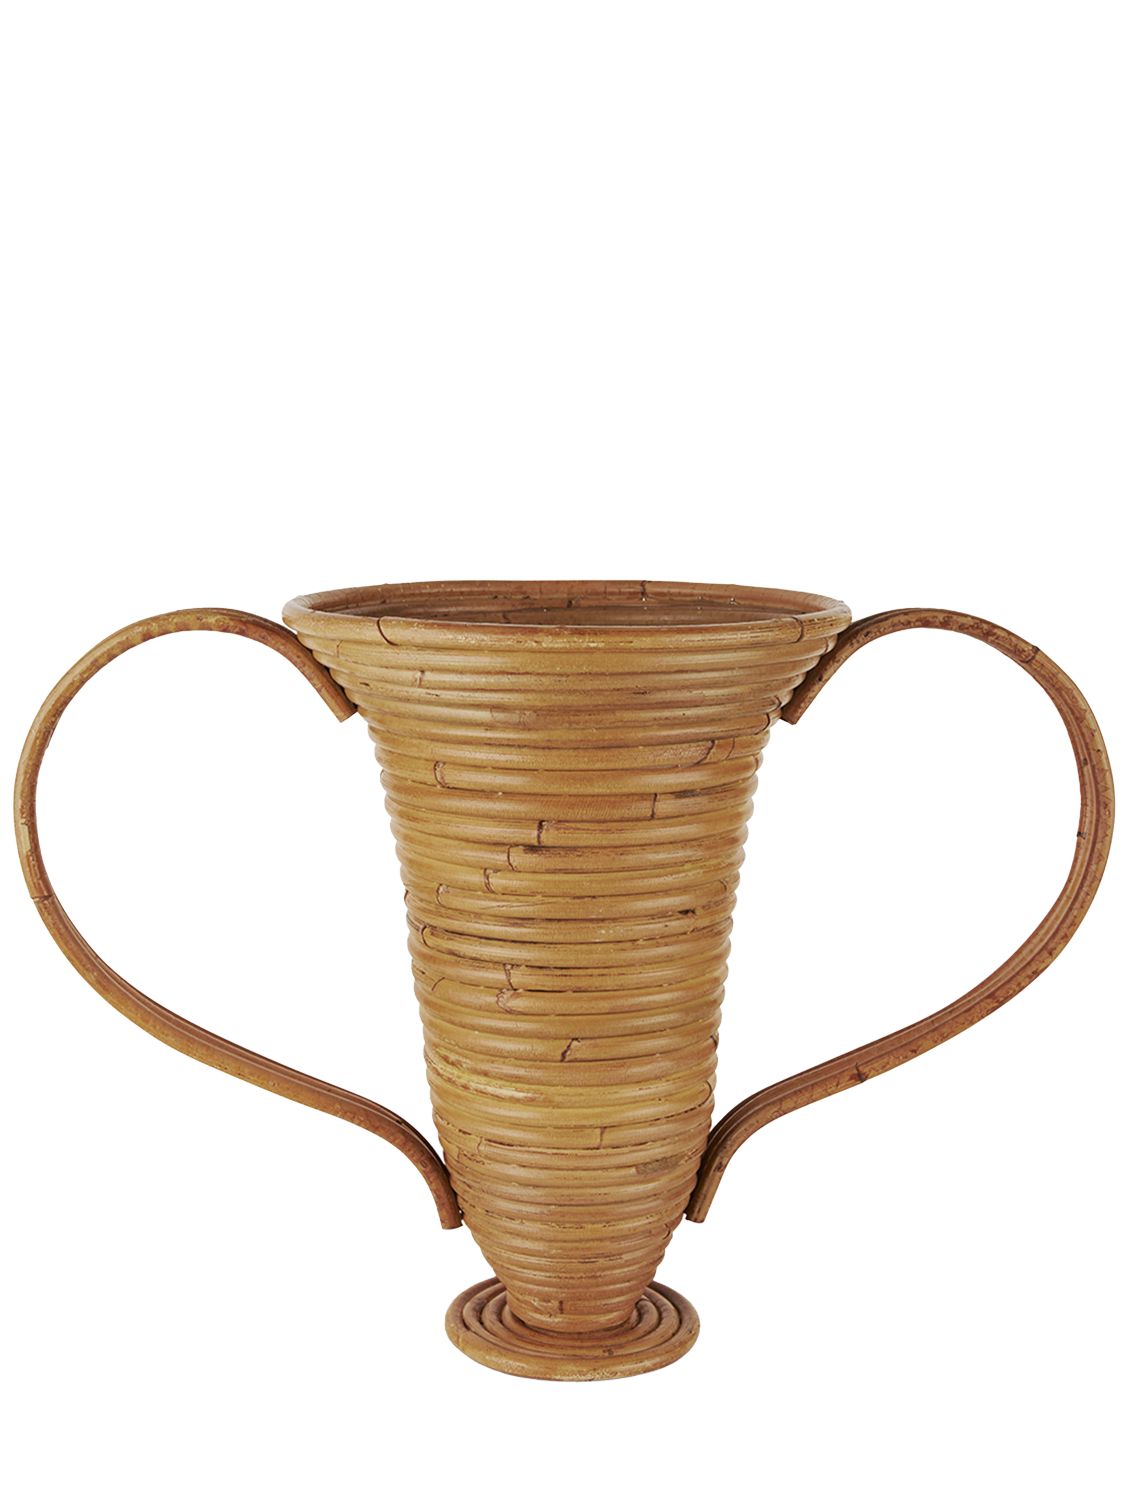 Image of Amphora Vase